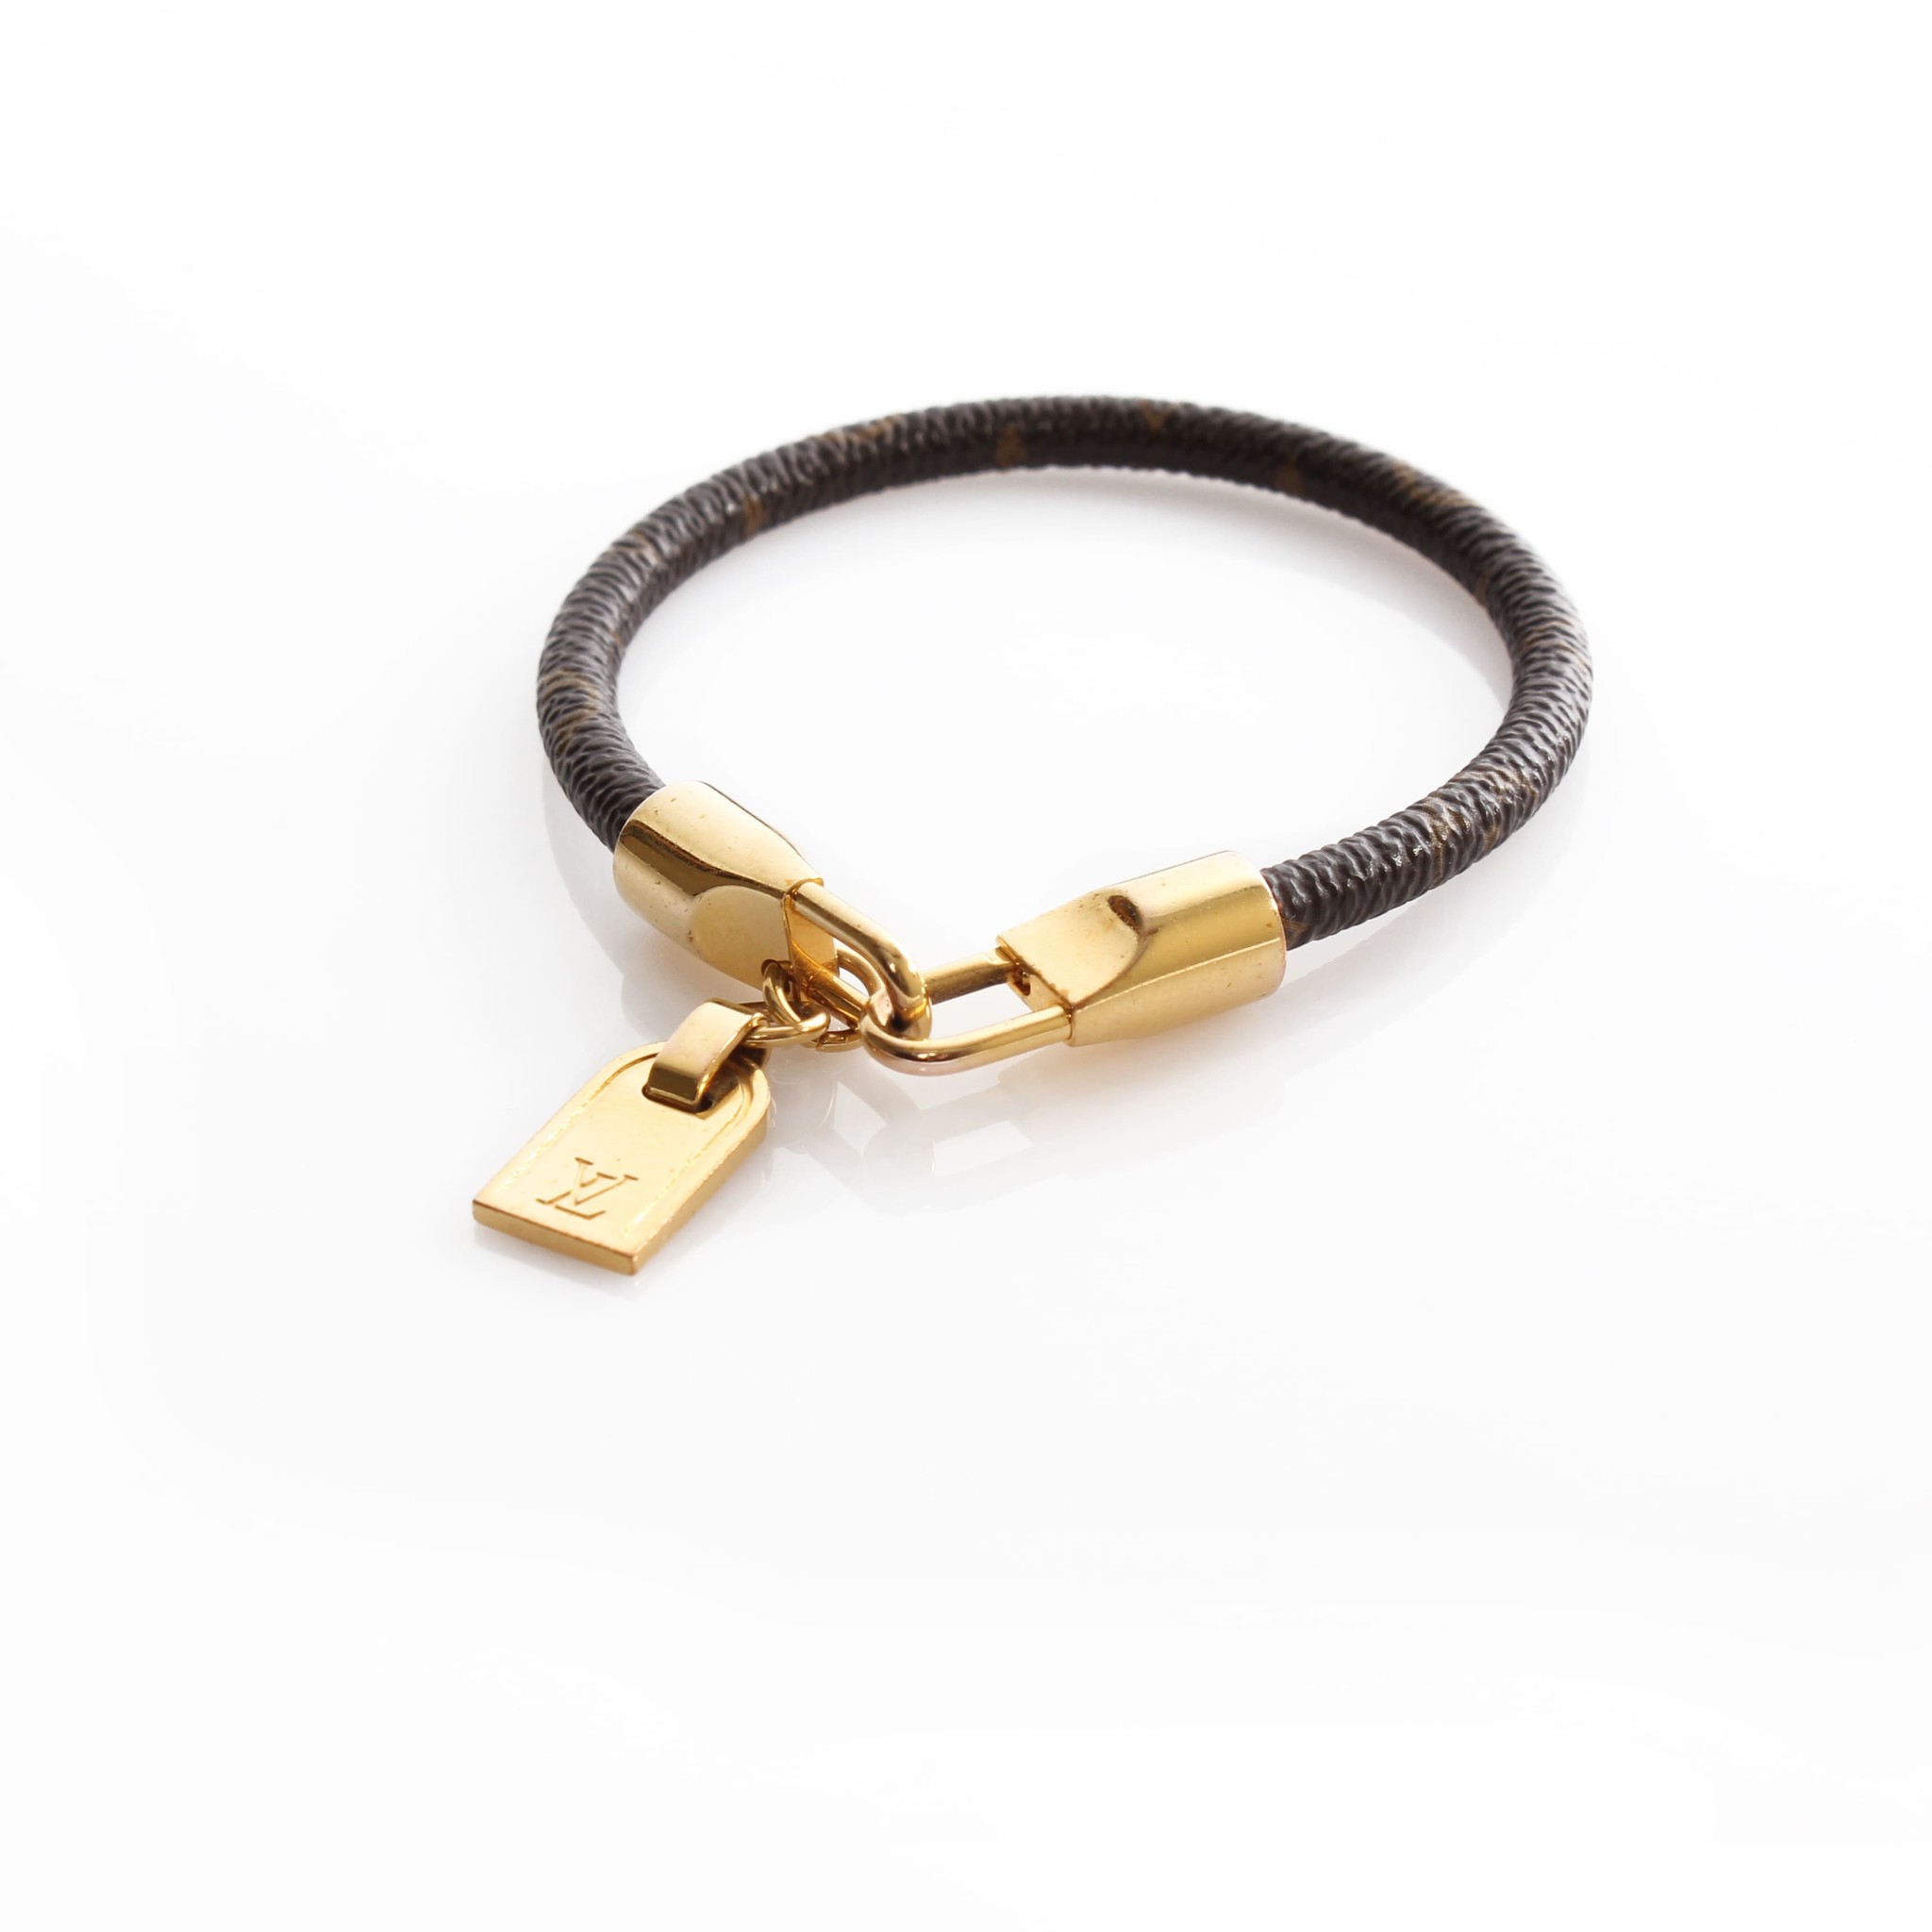 Louis Vuitton, brown monogram bracelet